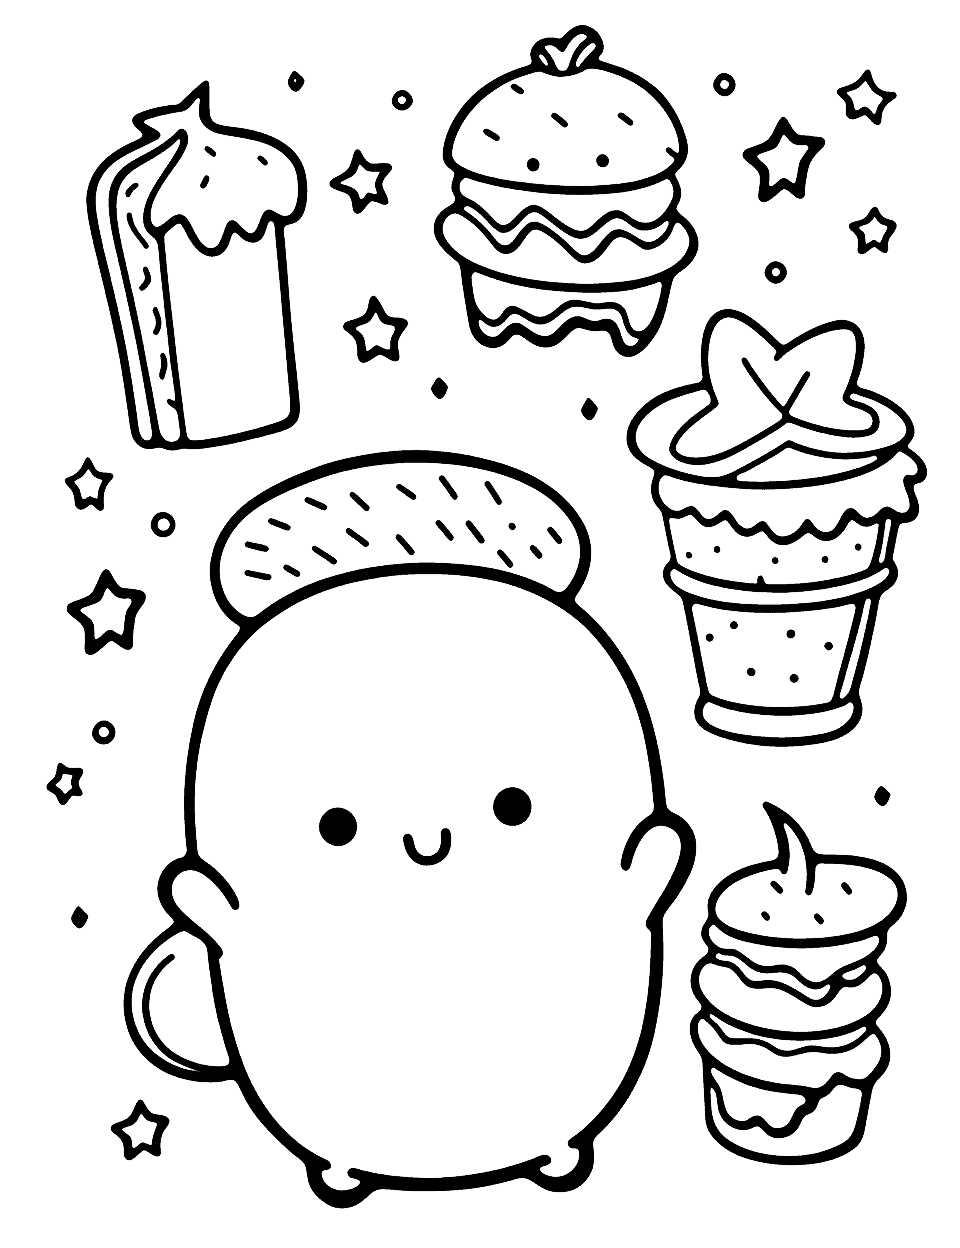 Kawaii Sweets Doodle: FREE Coloring Page (Printalbe PDF)